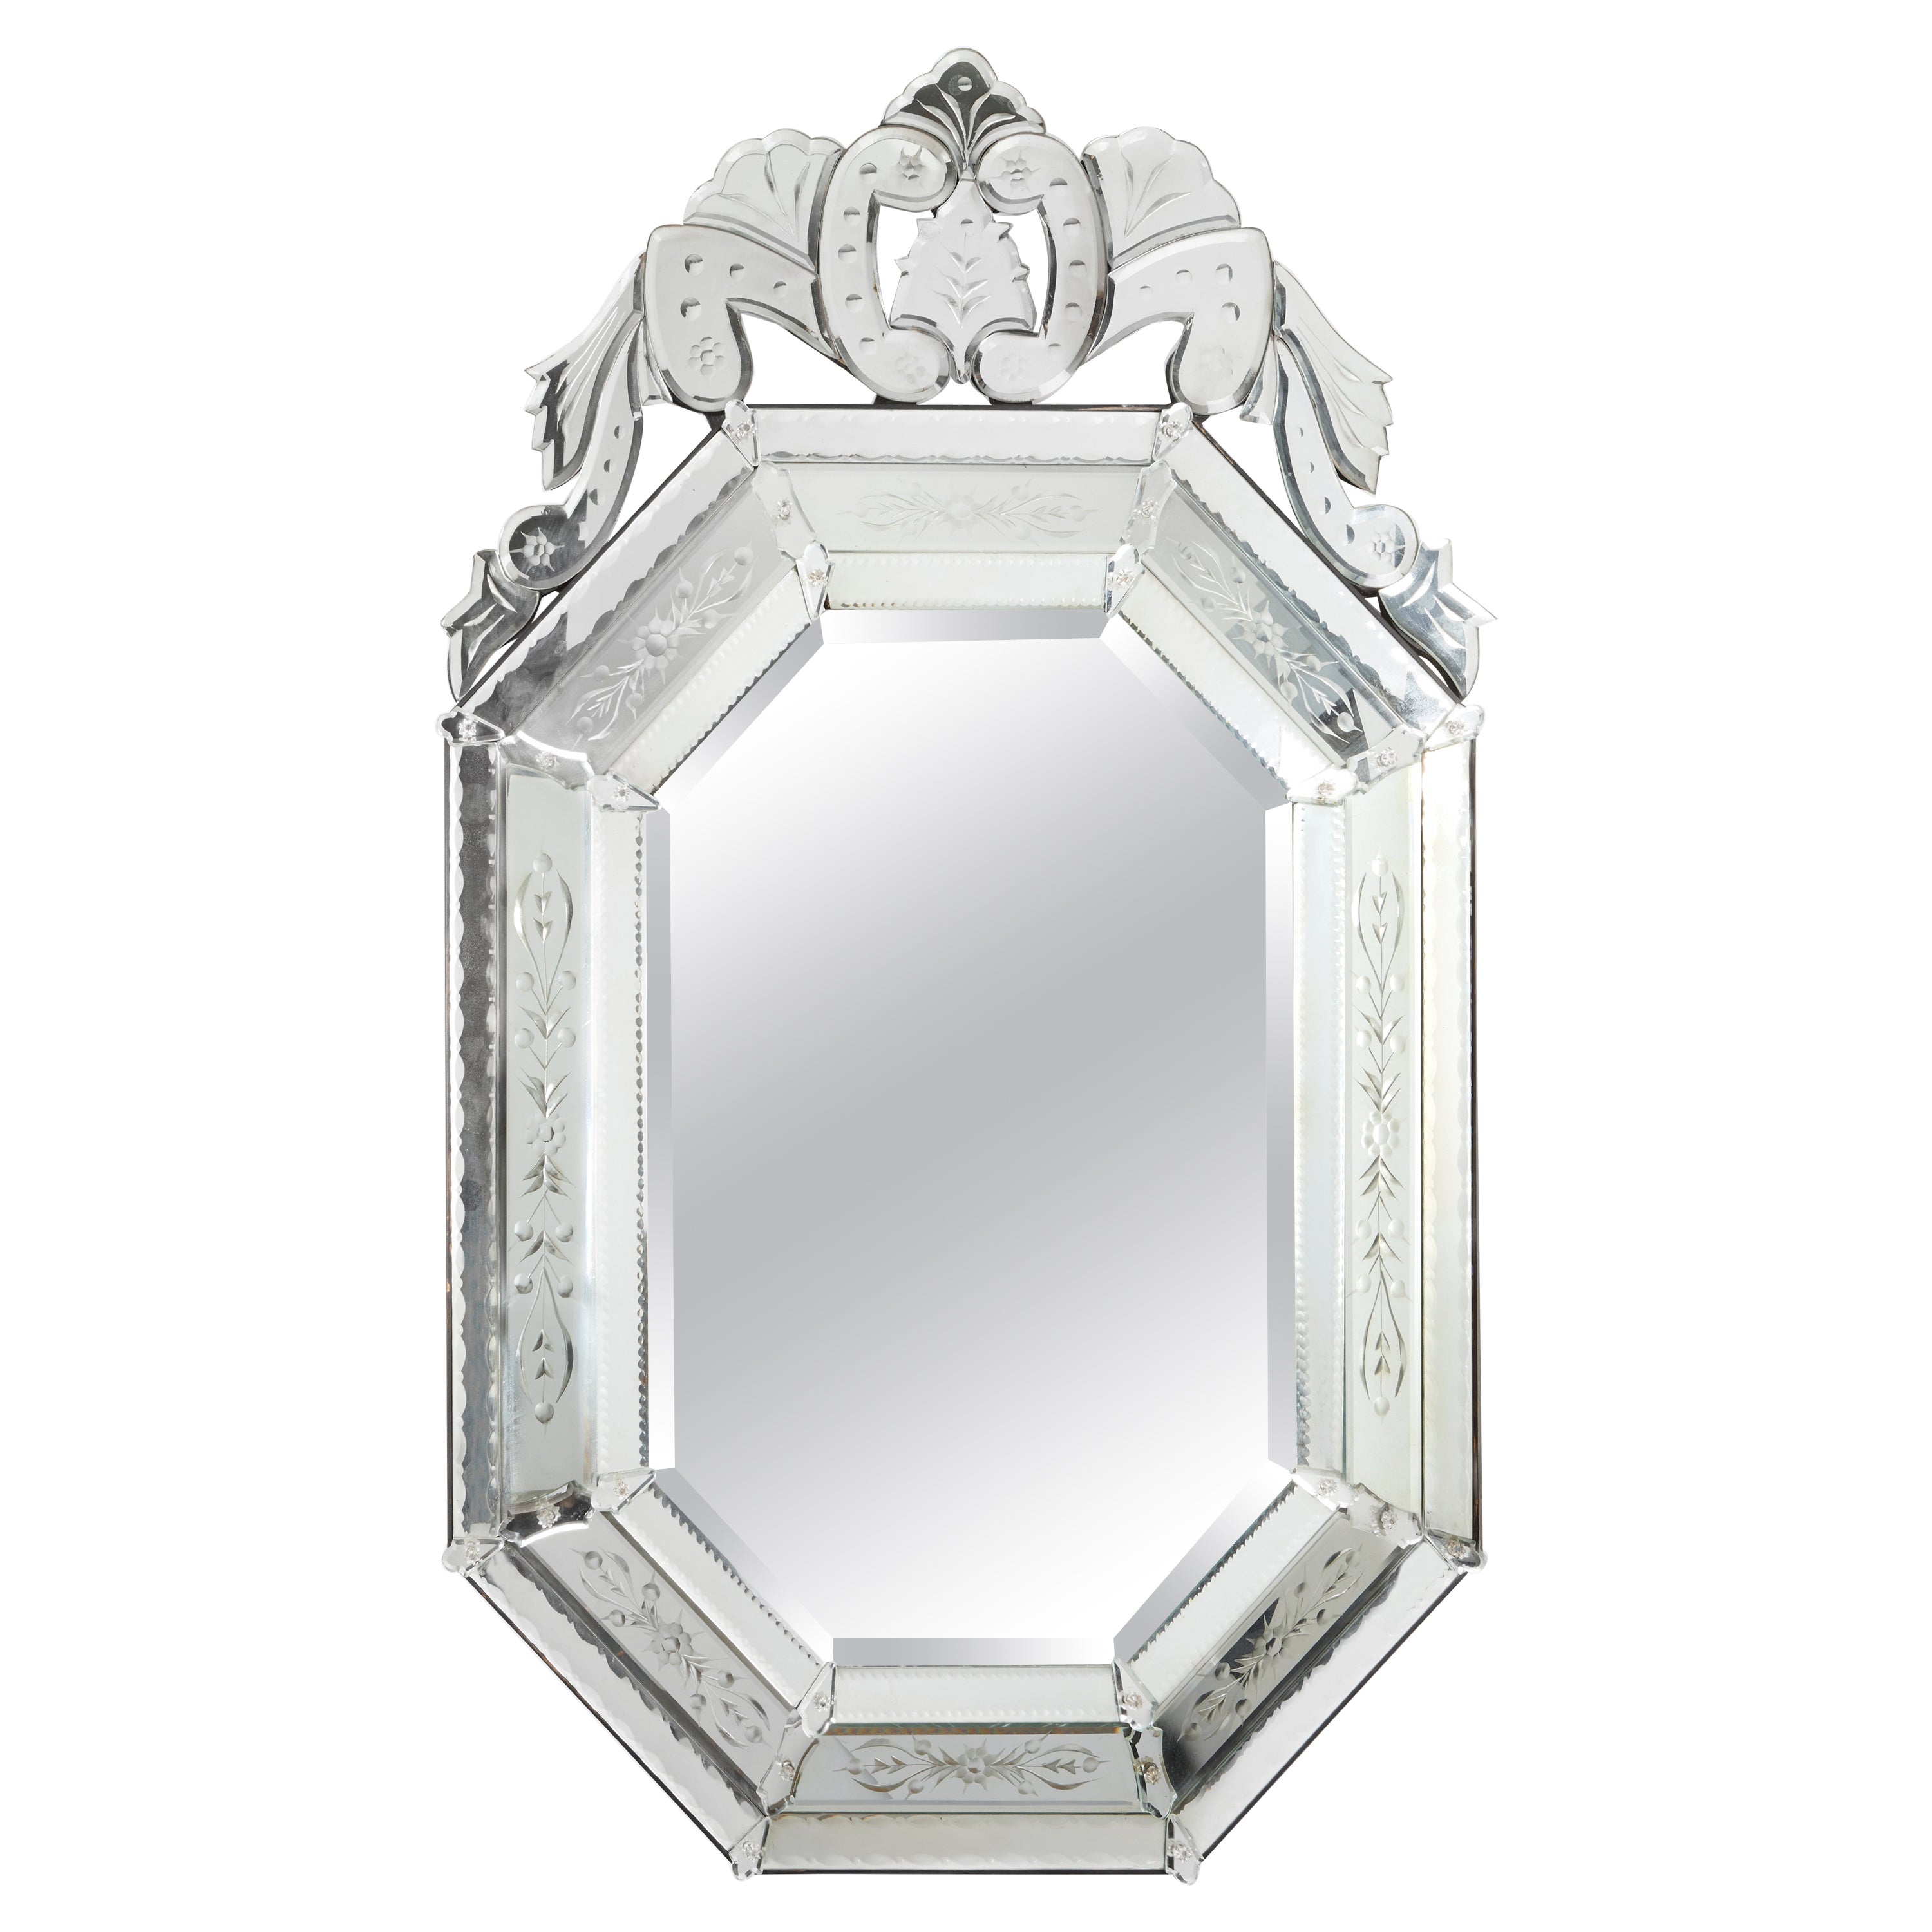 Octagonal Venetian Mirror with a Crest Top